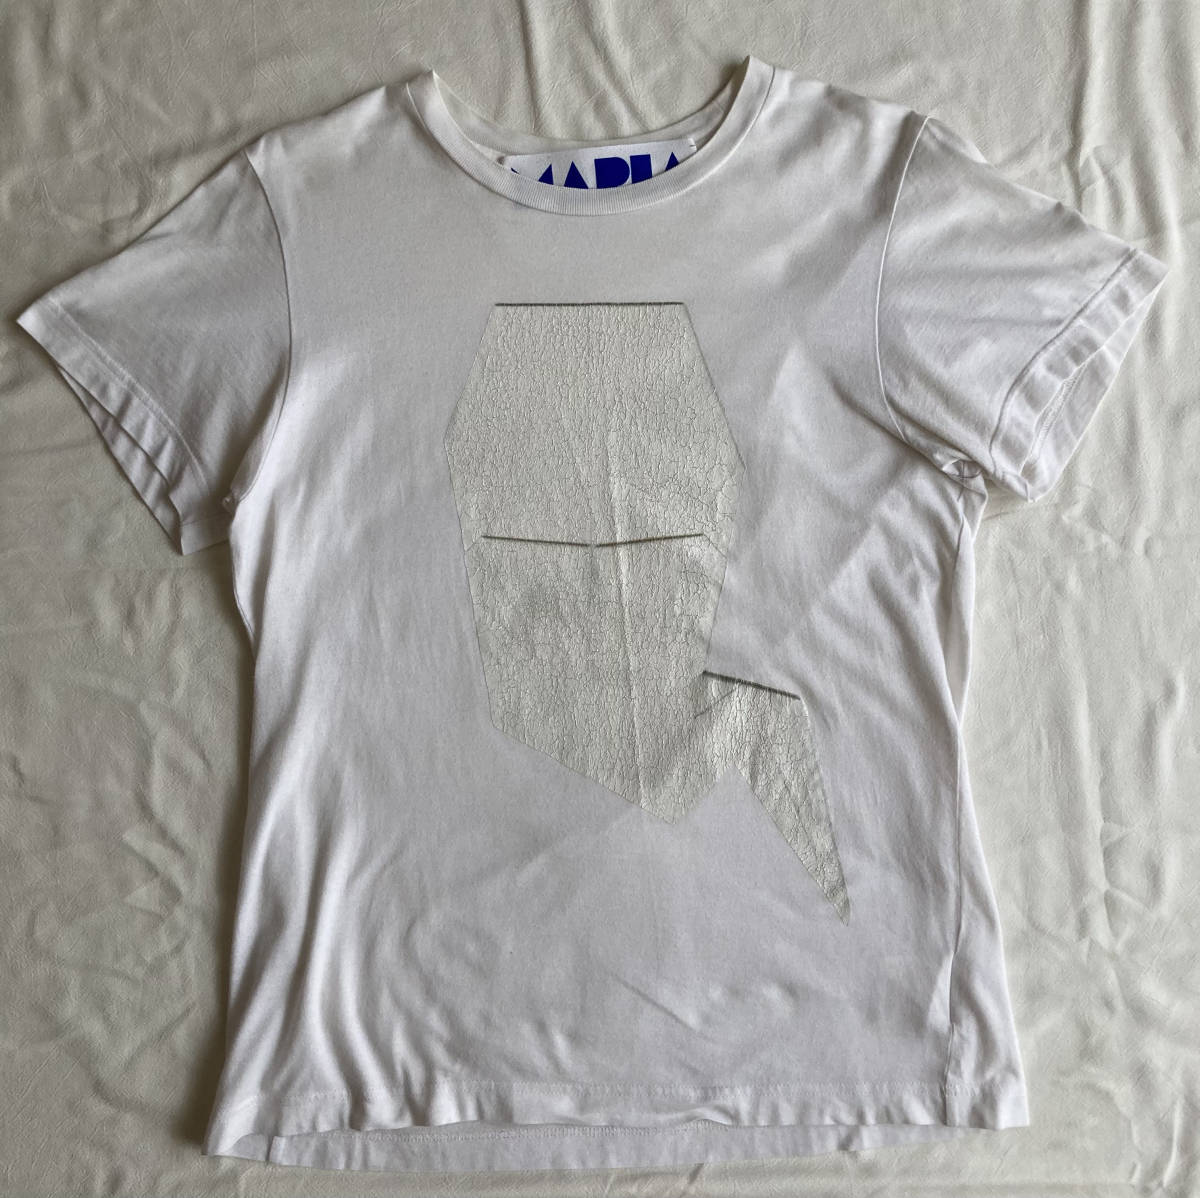 MARIA футболка / Мали a/ унисекс cut and sewn / белый белый / графика принт /Made in Japan сделано в Японии /MARIOS Mario s